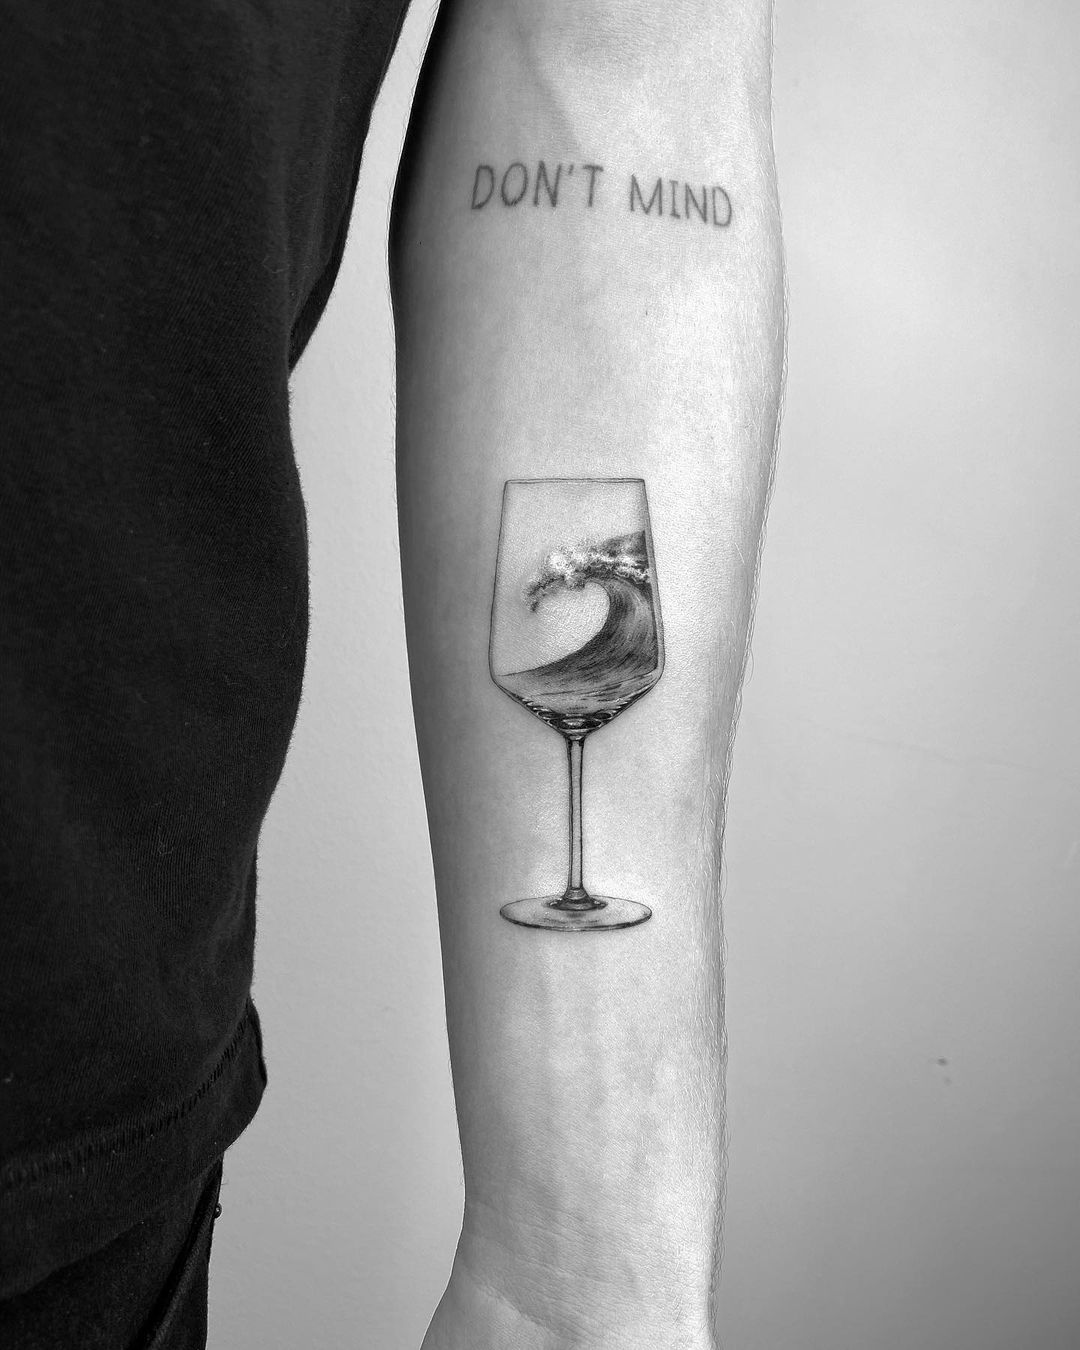 25 Boozy Tattoos for Those Who Enjoy Wine Time